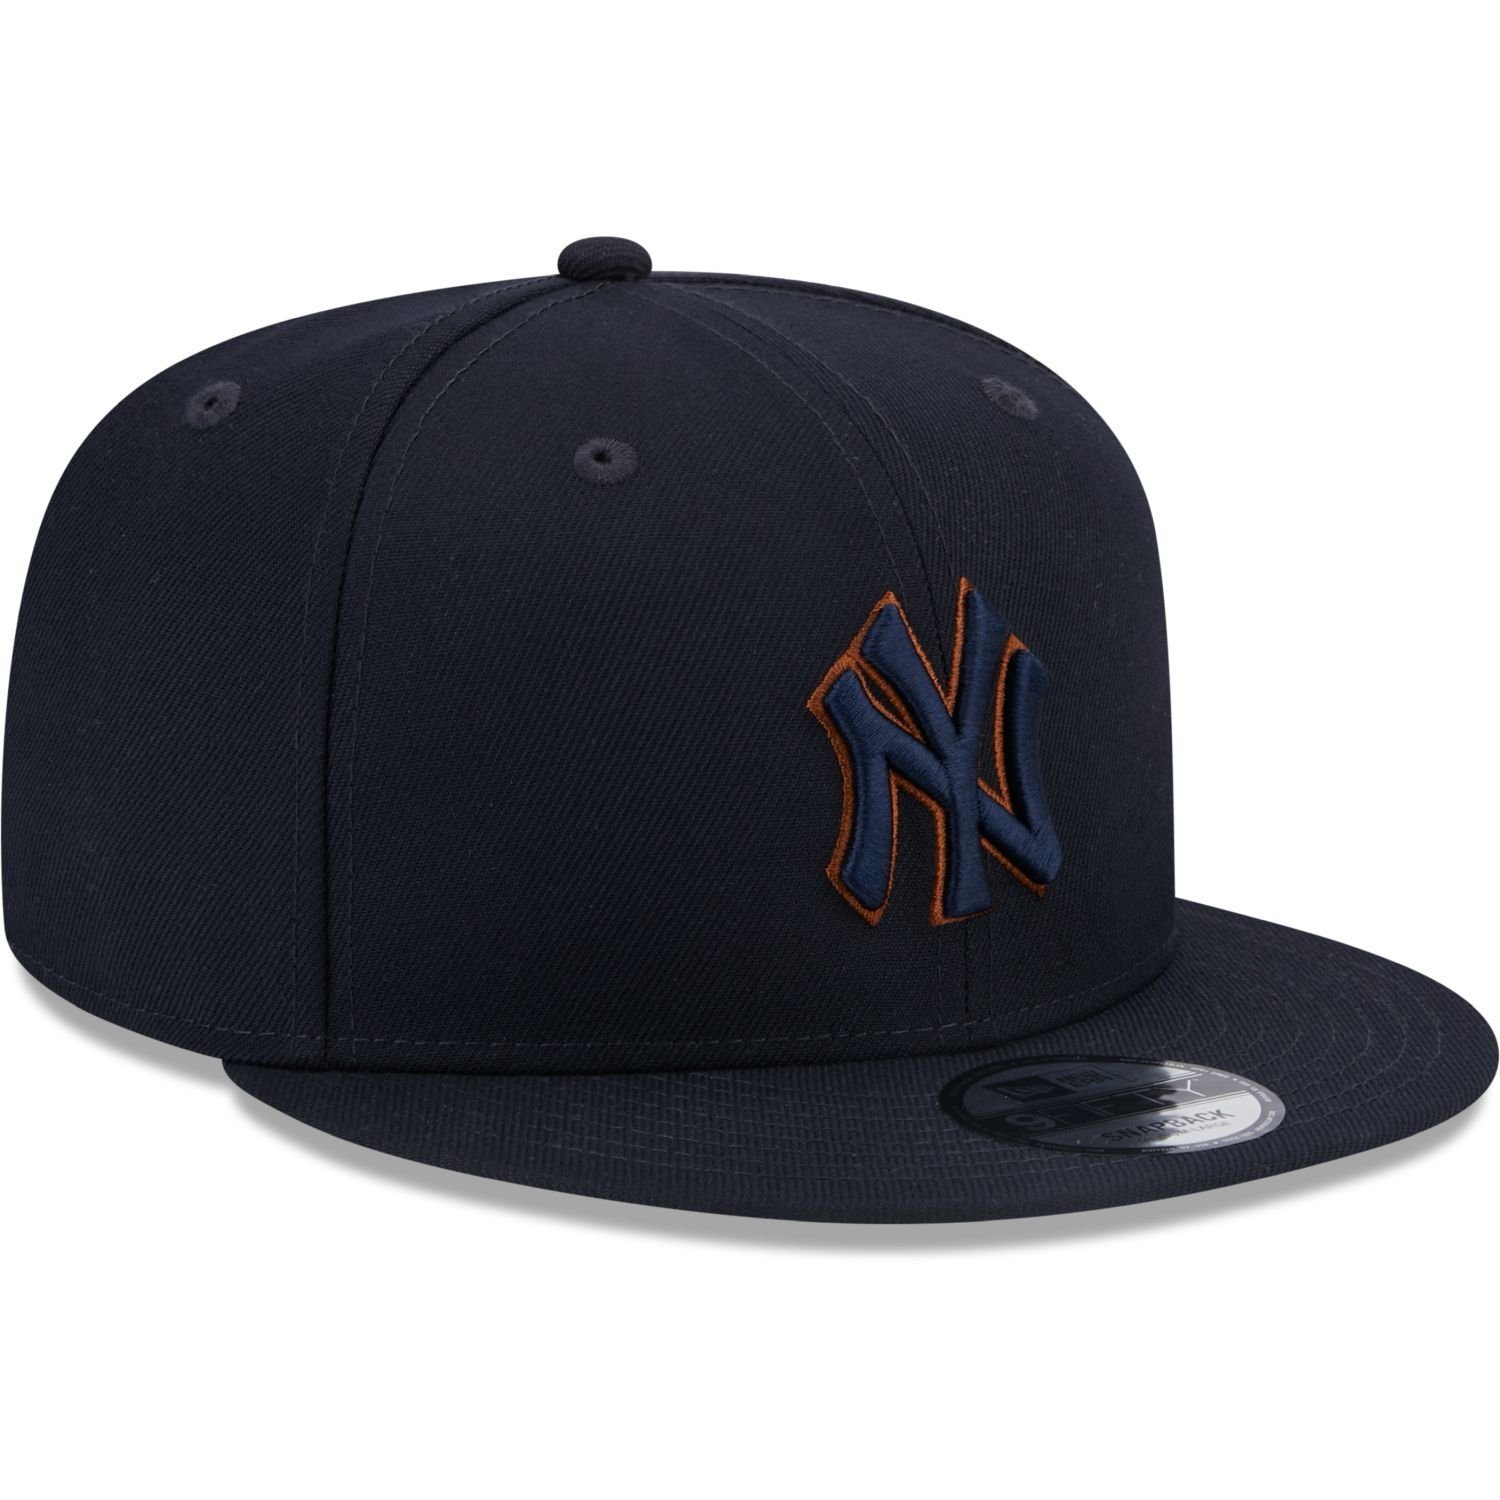 New Cap Snapback Yankees REPREVE York Era 9Fifty New